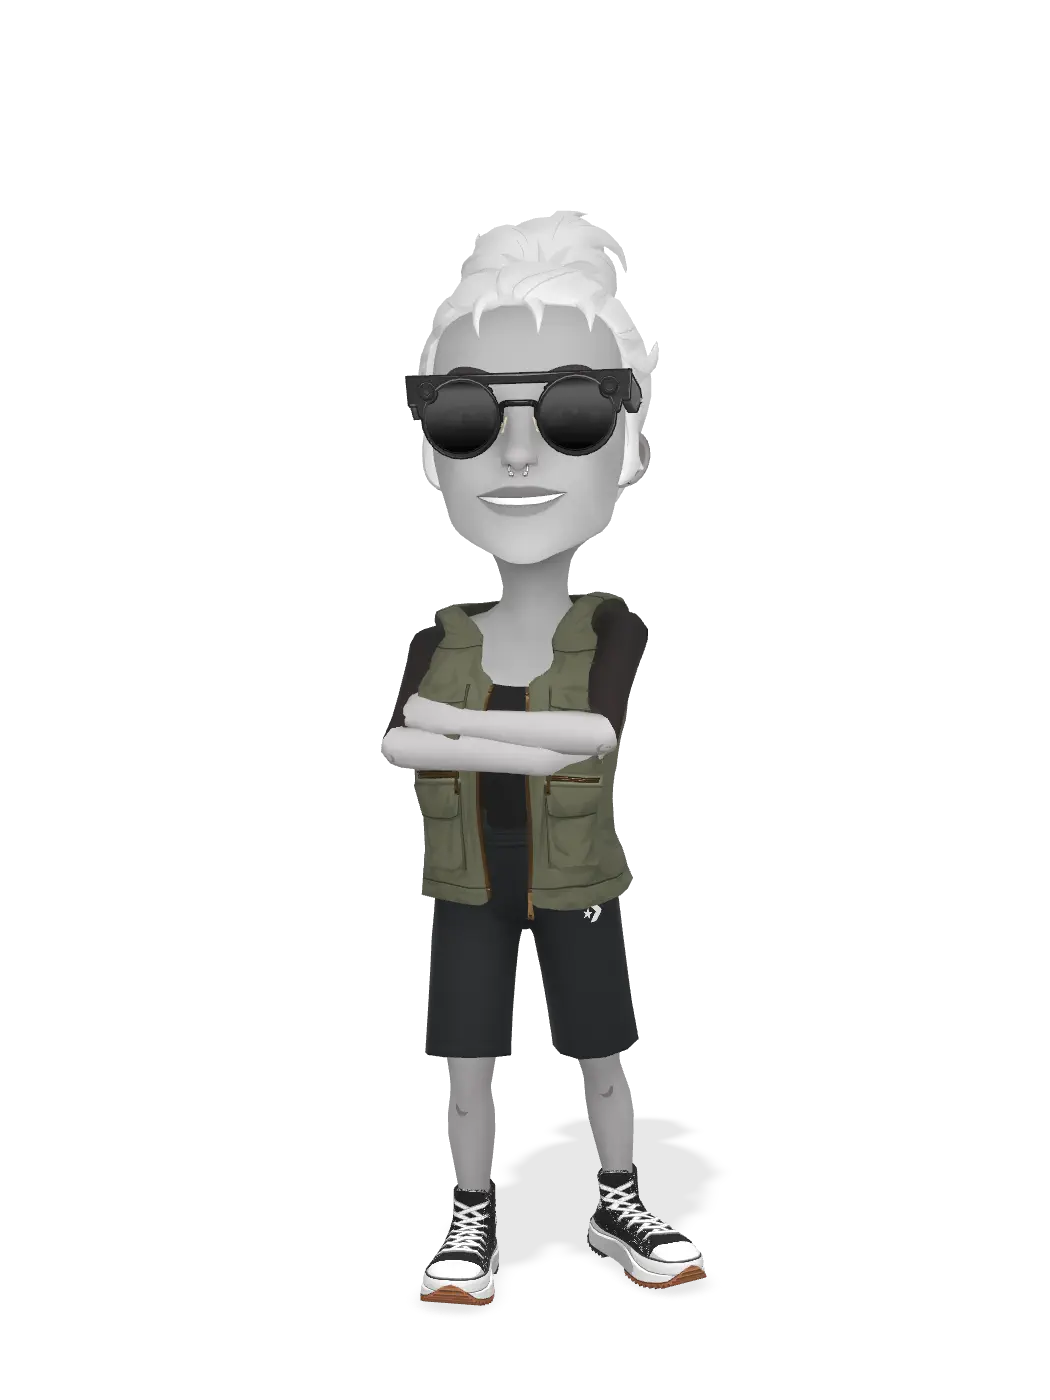 3D Bitmoji for rmg.9 avatar